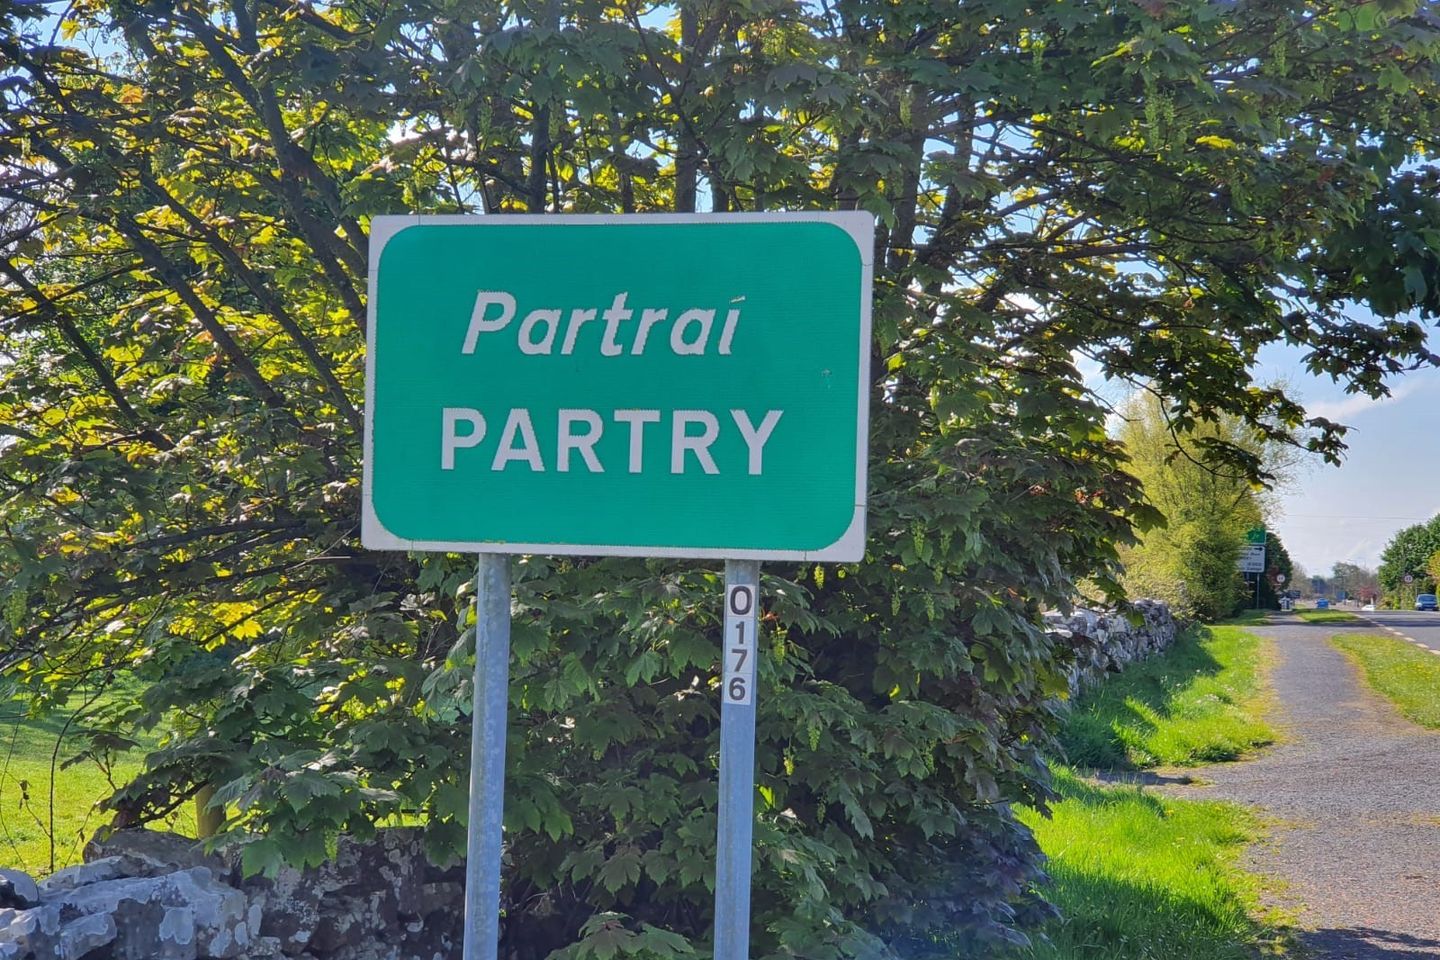 Portroyal, Partry, Co. Mayo